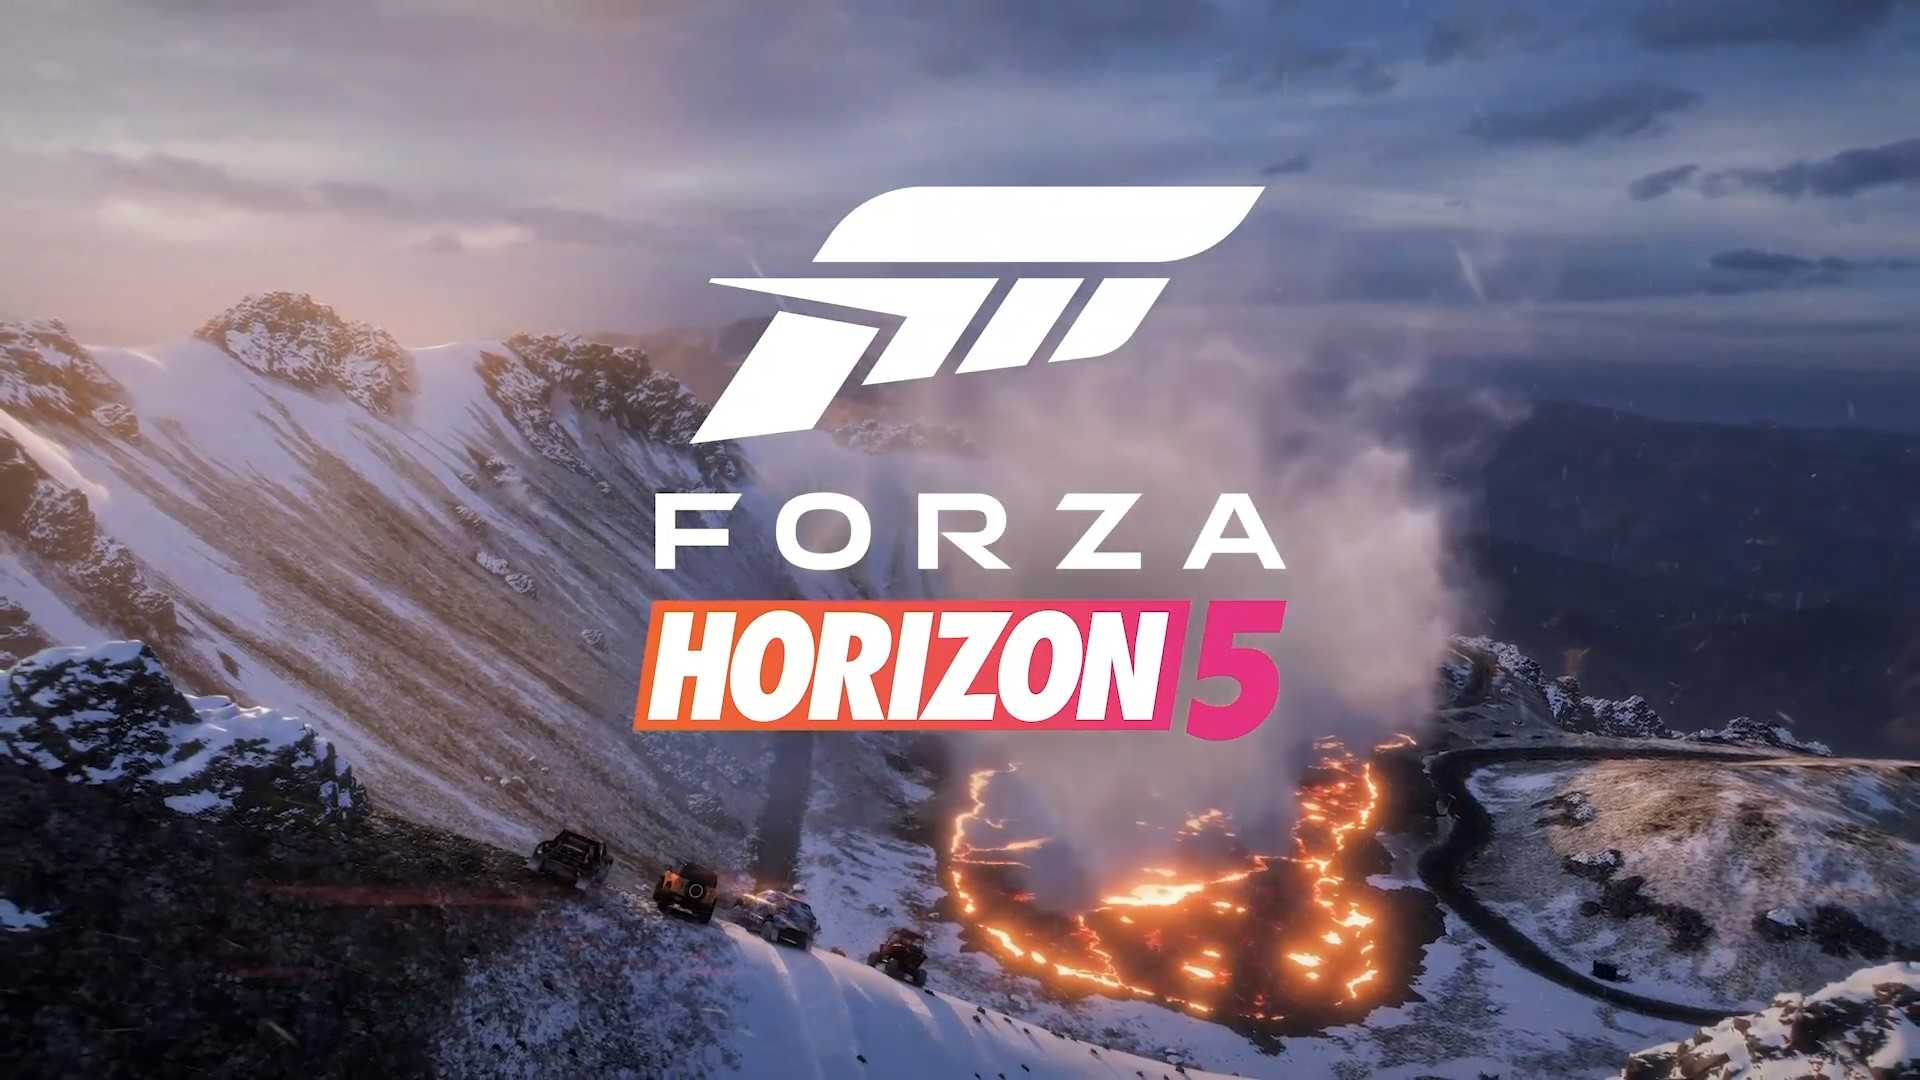 Forza Horizon Wallpaper Ixpap